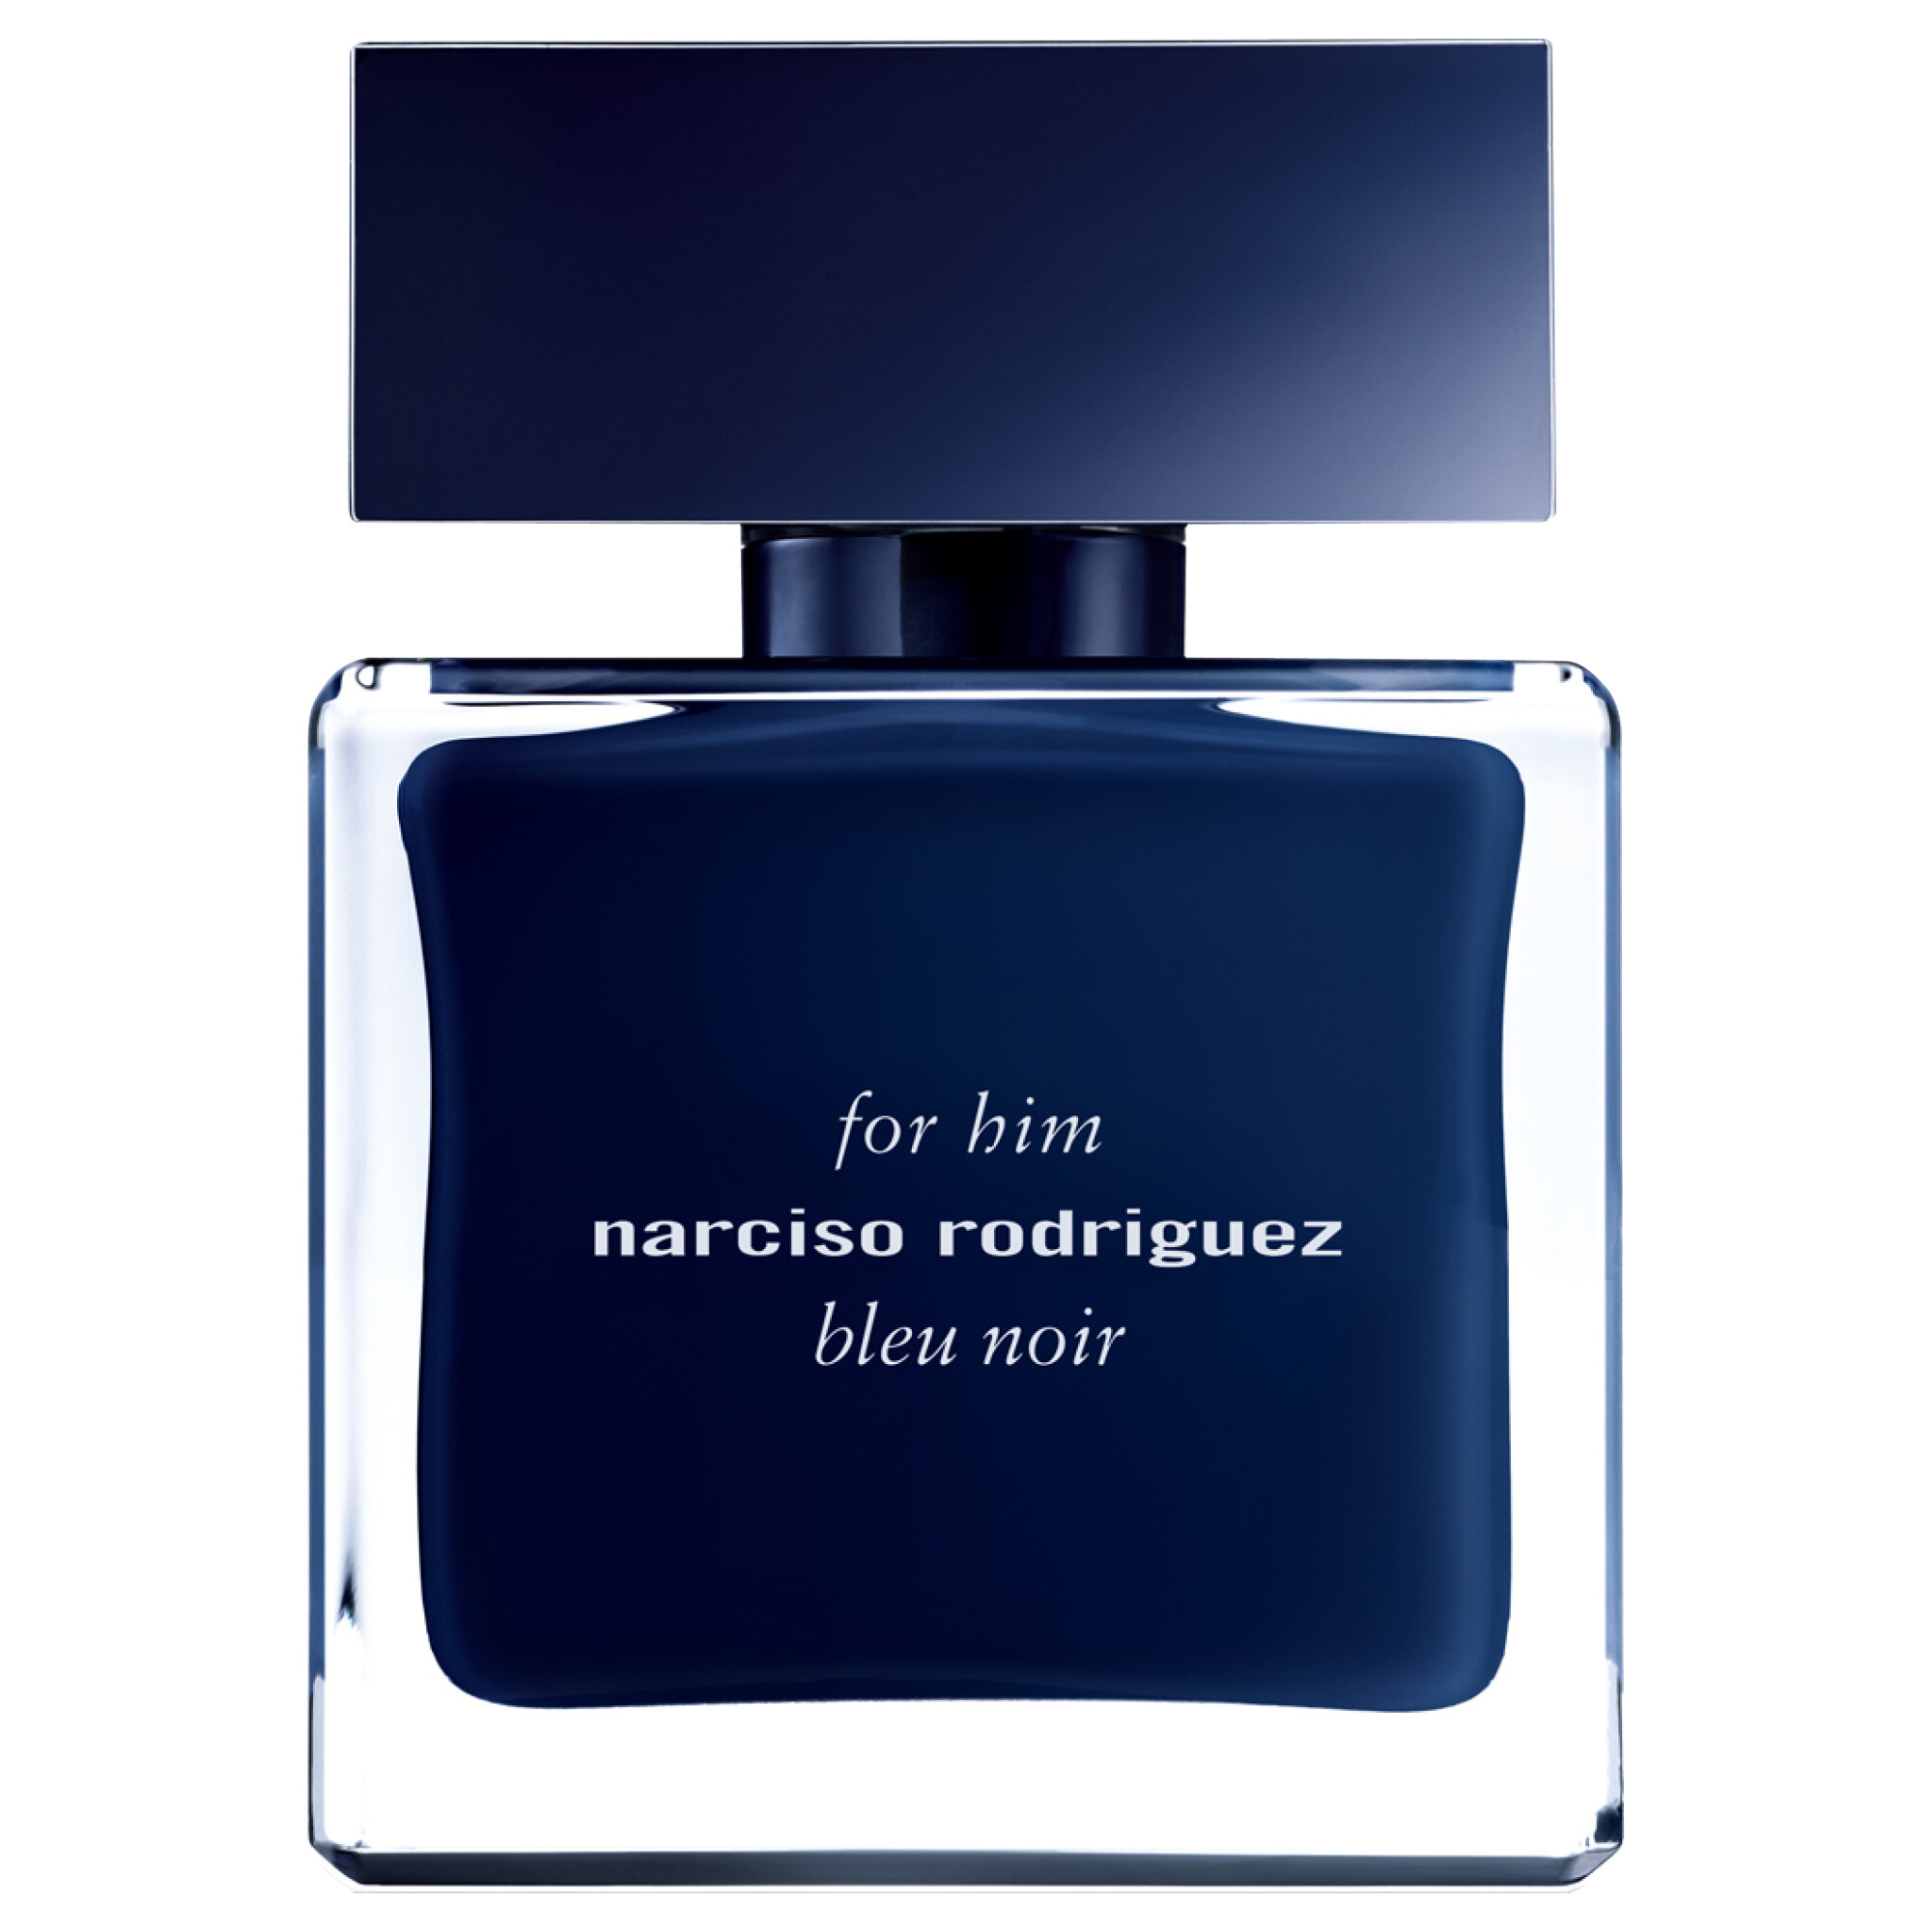 Narciso Rodriguez Narciso Rodriguez for him bleu noir kaufen